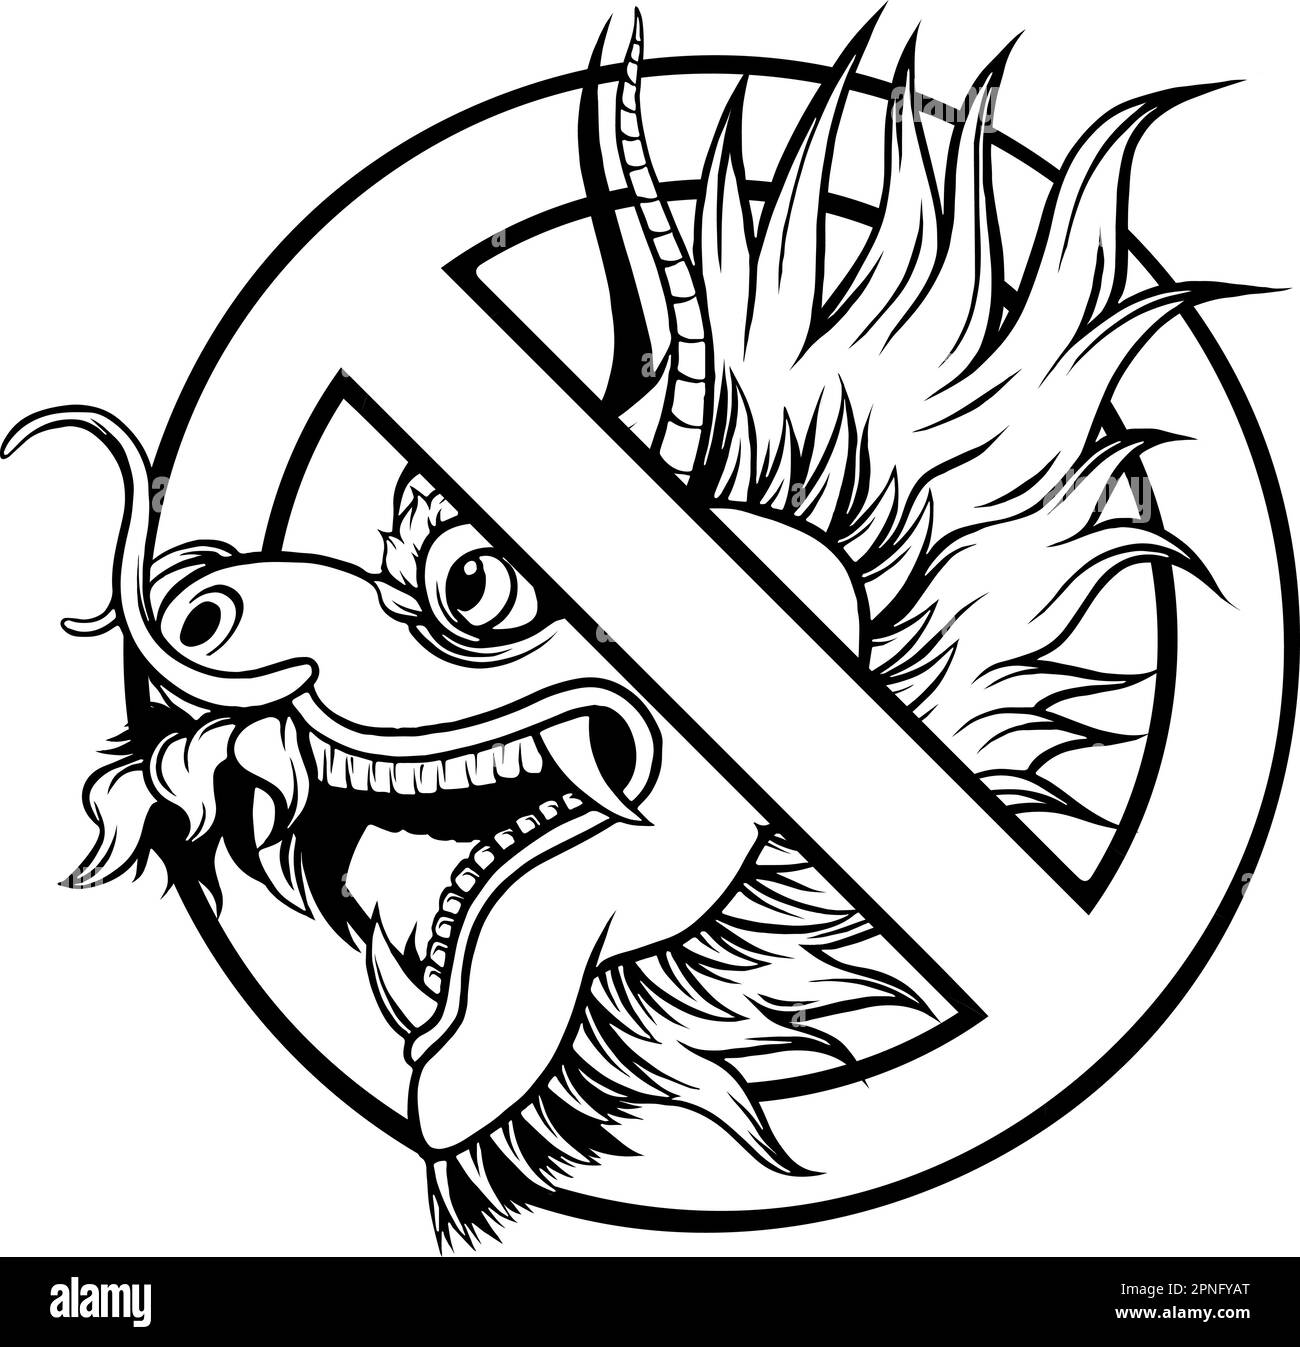 Dragon head, black and white vector illustration Stock Vector